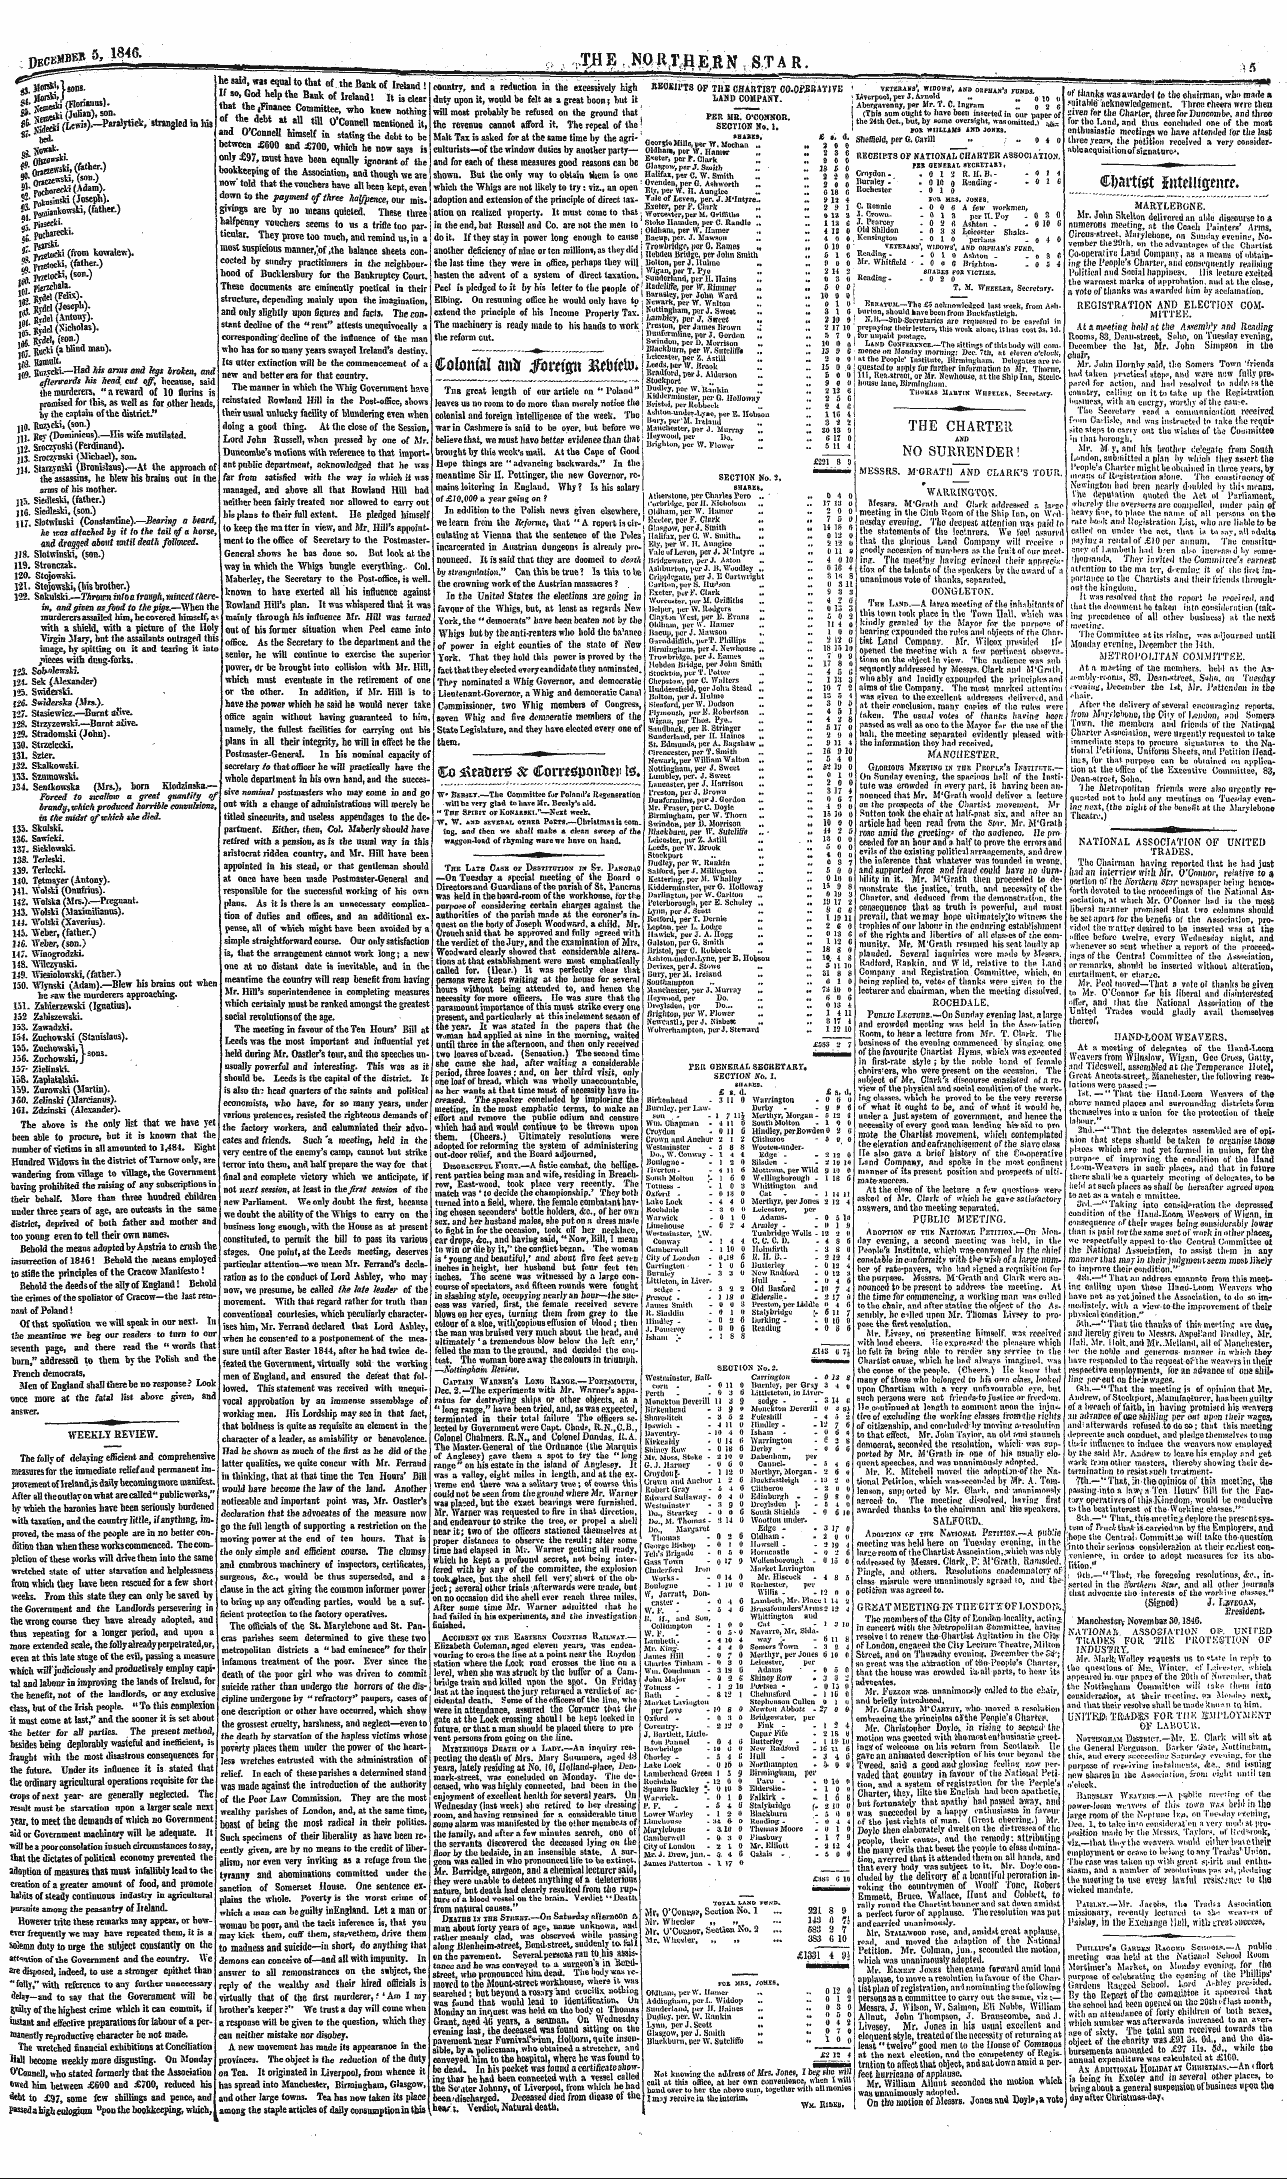 Northern Star (1837-1852): jS F Y, 3rd edition: 5